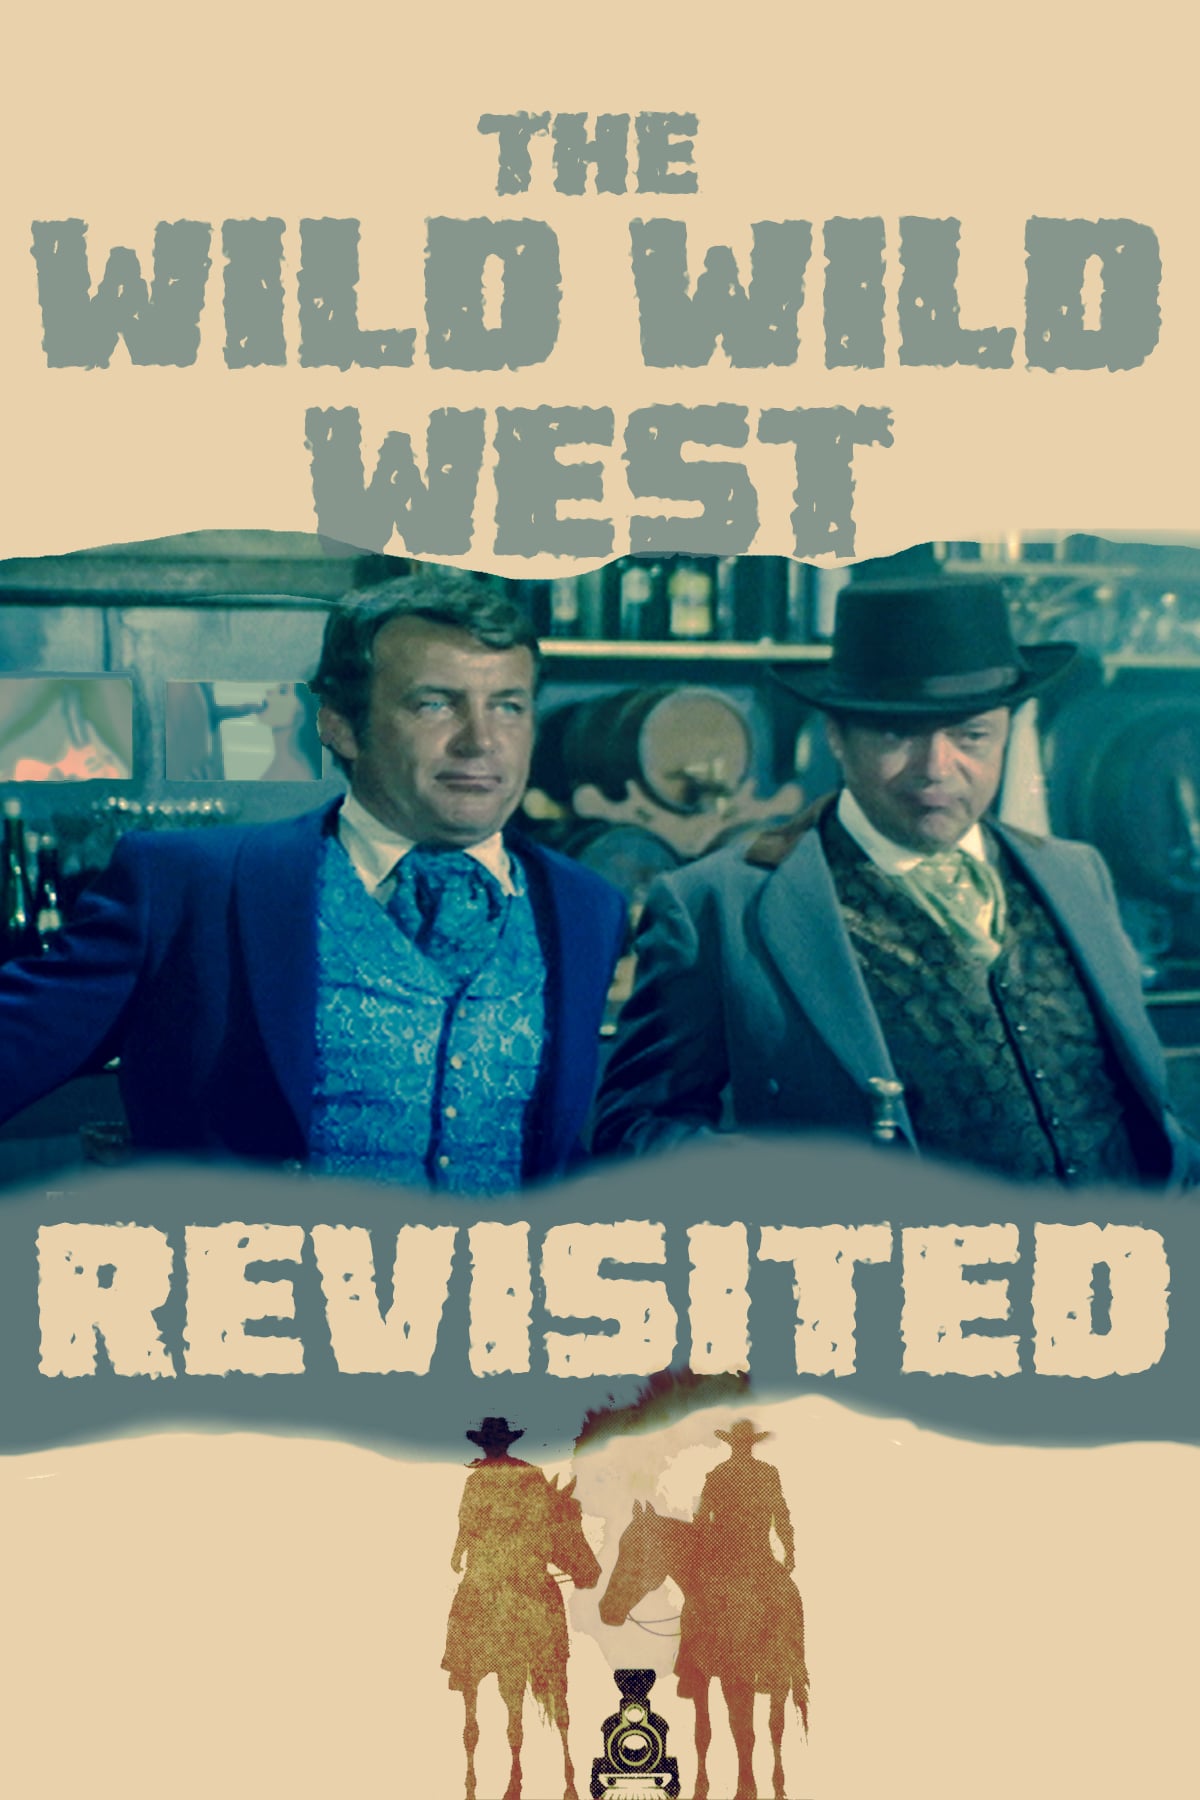 The Wild Wild West Revisited